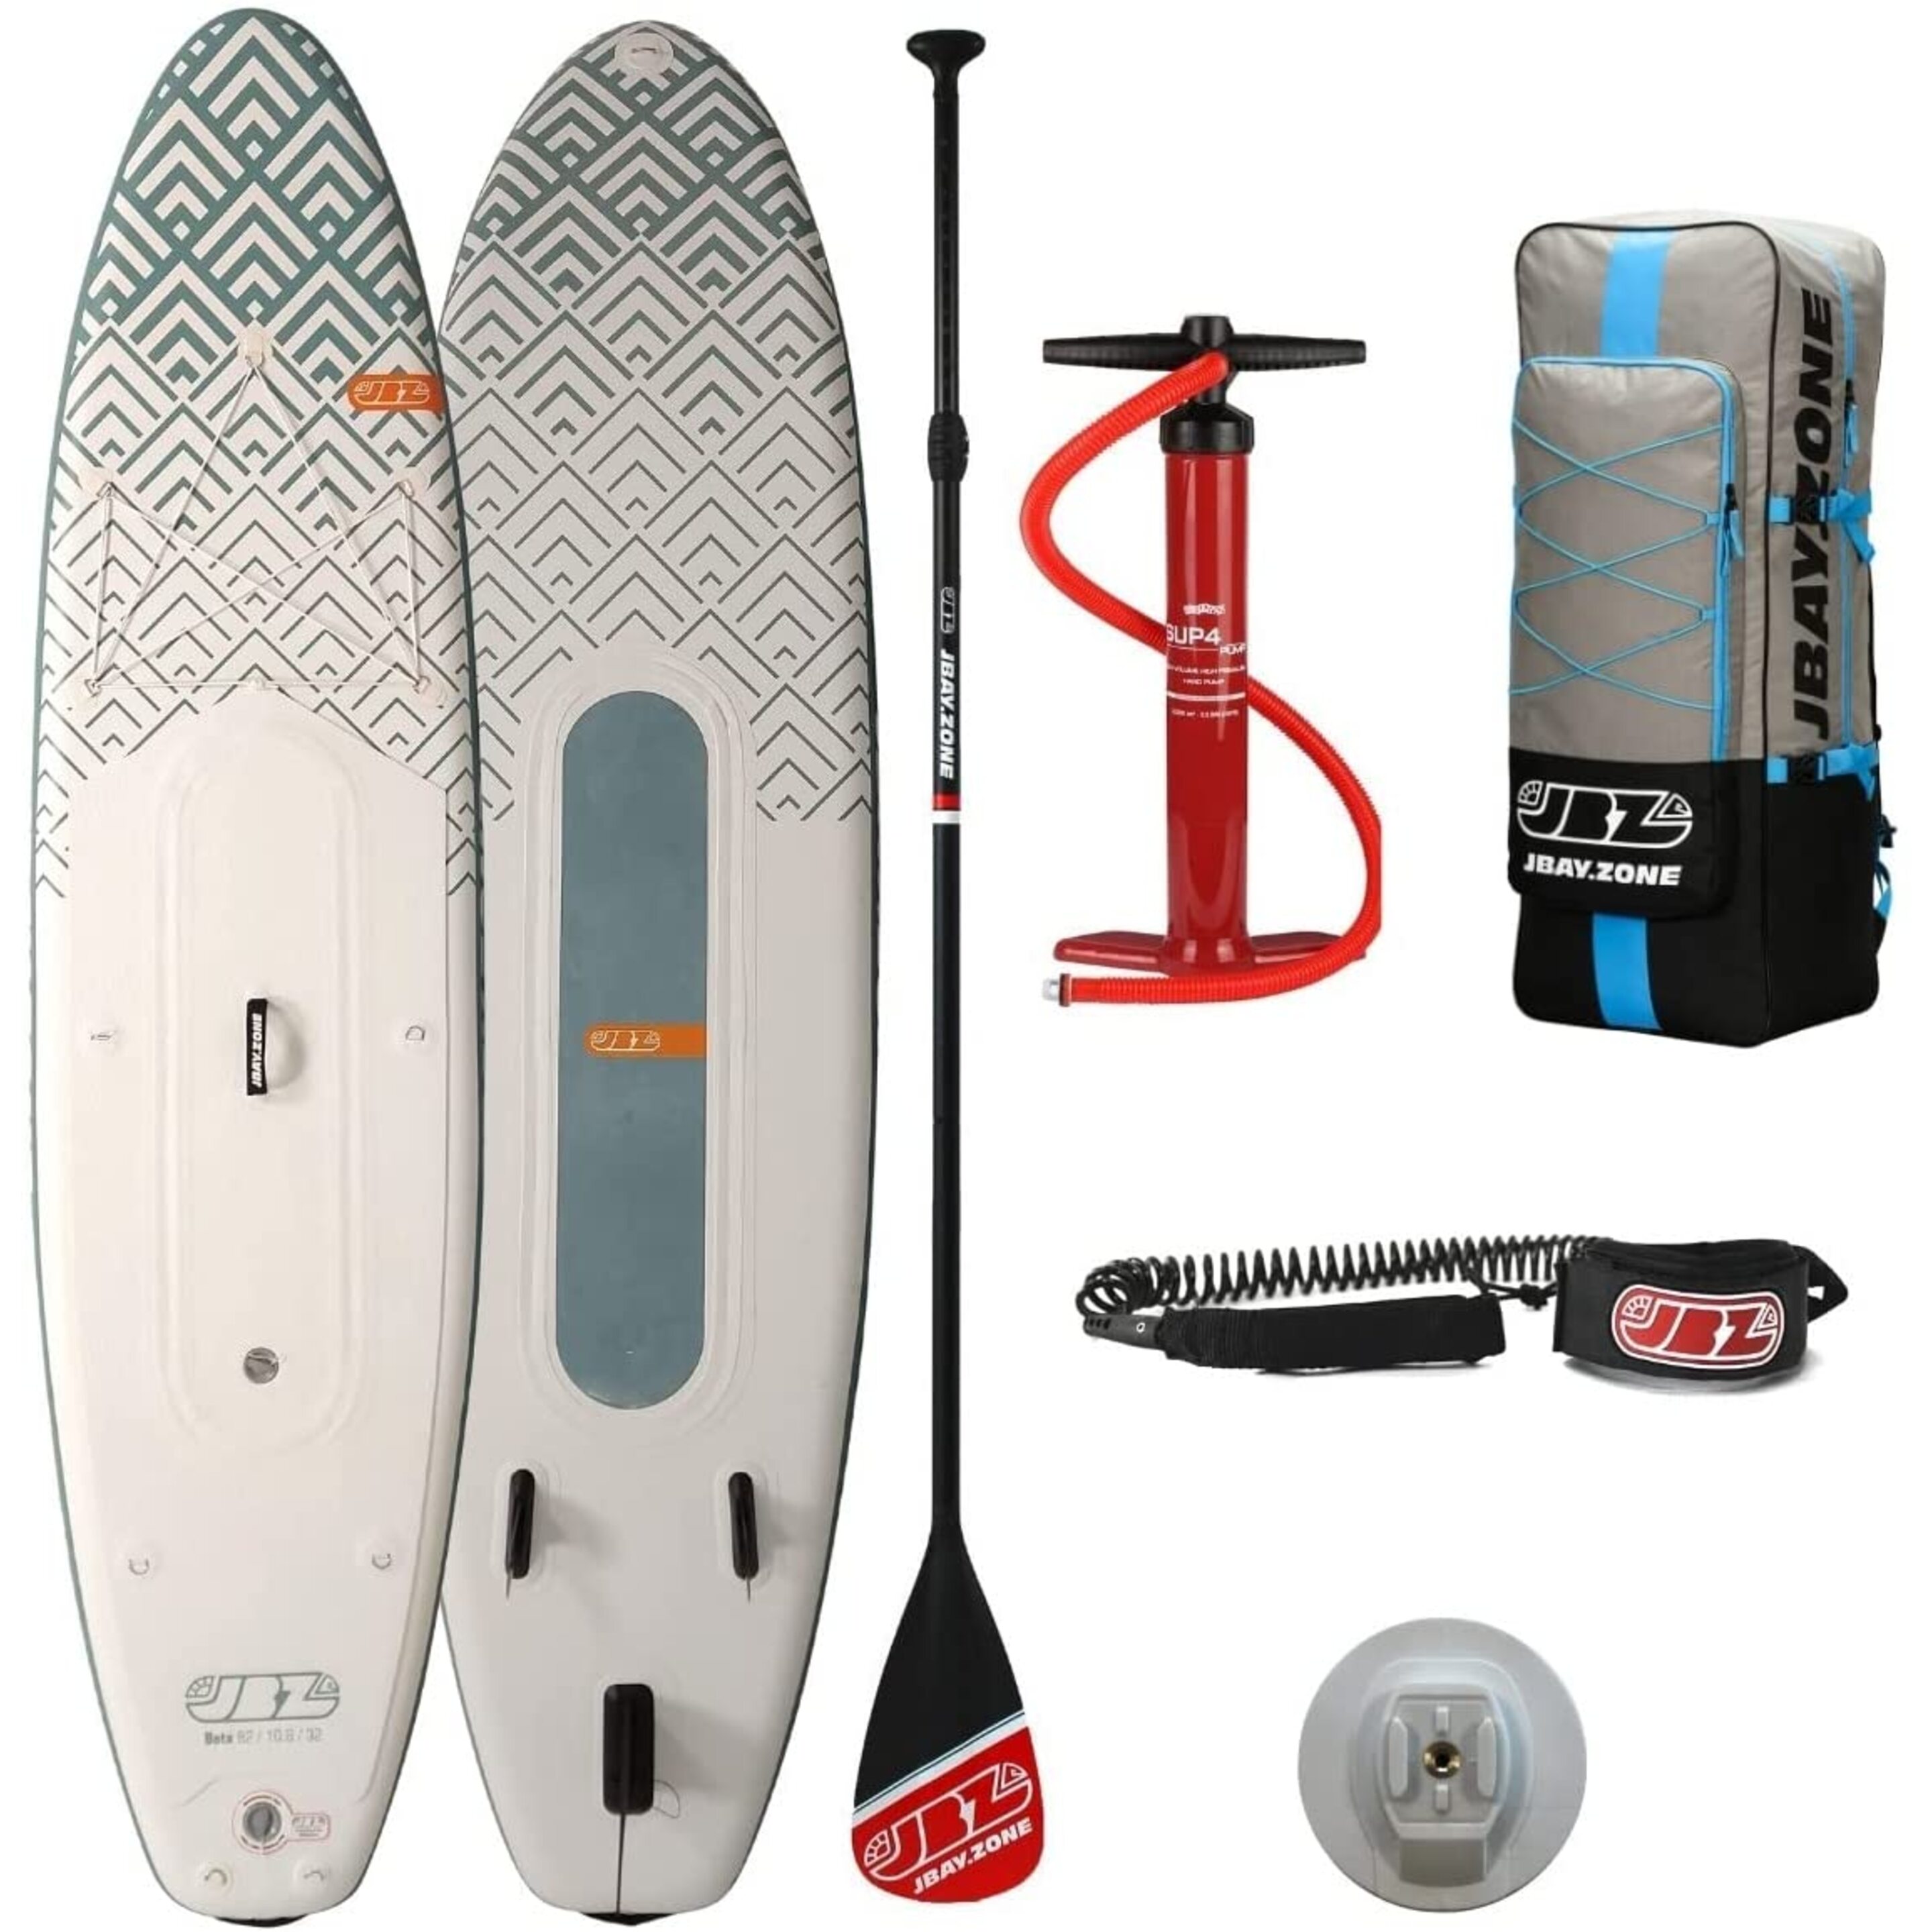 Tabla De Stand Up Paddle Surf Sup Hinchable Jbay.zone Double Chamber Beta B2 - Verde/Blanco  MKP